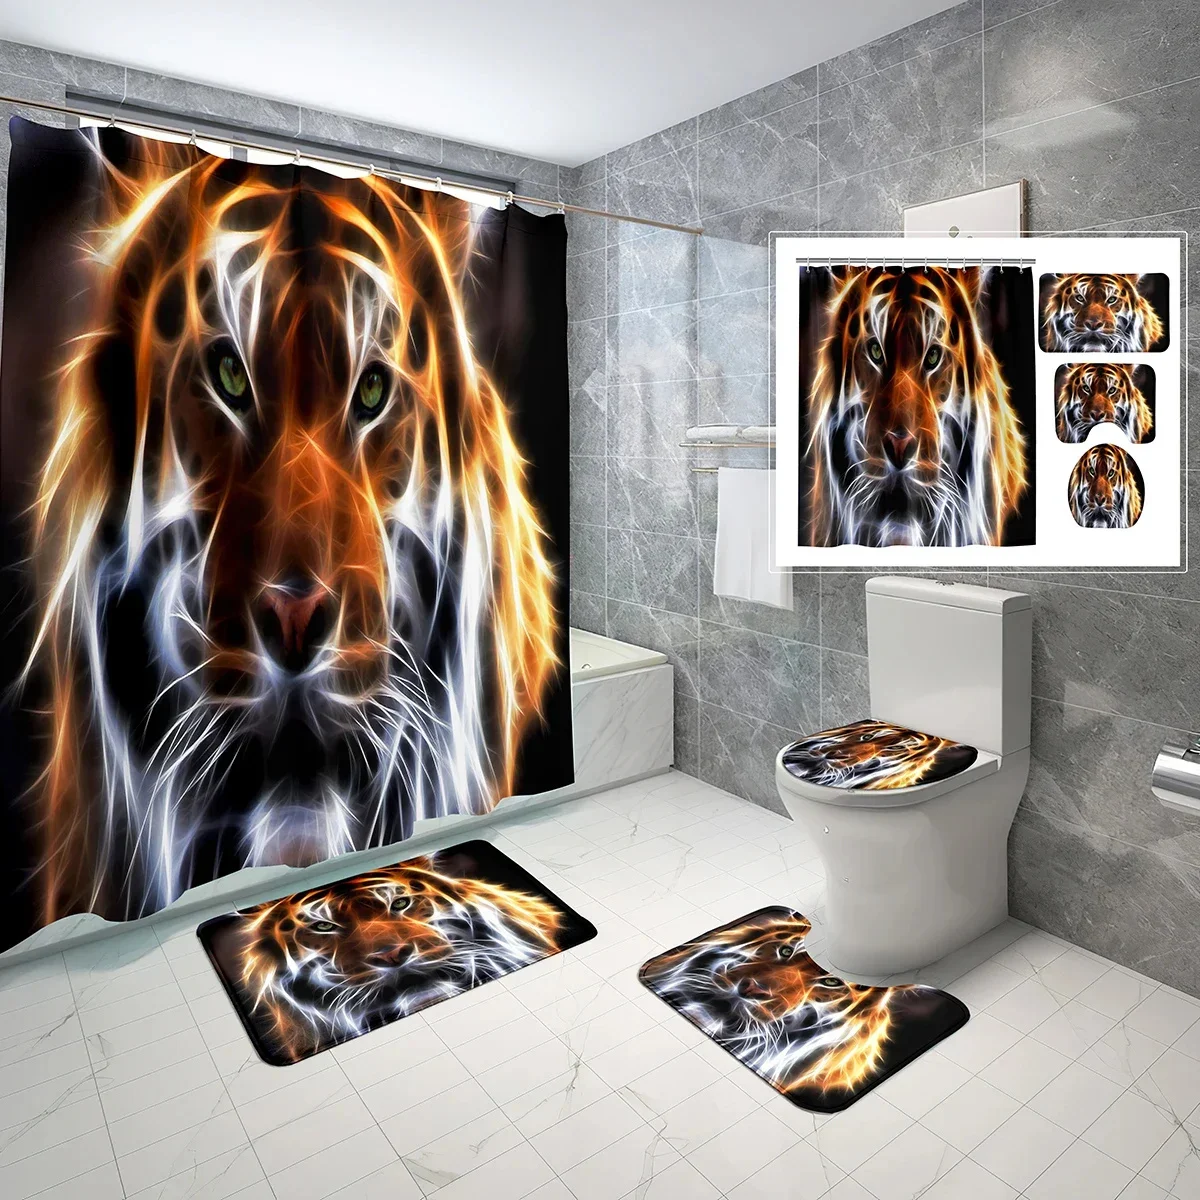 

Shower curtain set Bathroom Wildlife Tiger Dog Shower Curtain mat Toilet Seat mat Printed Waterproof Fabric Bathroom Decoration